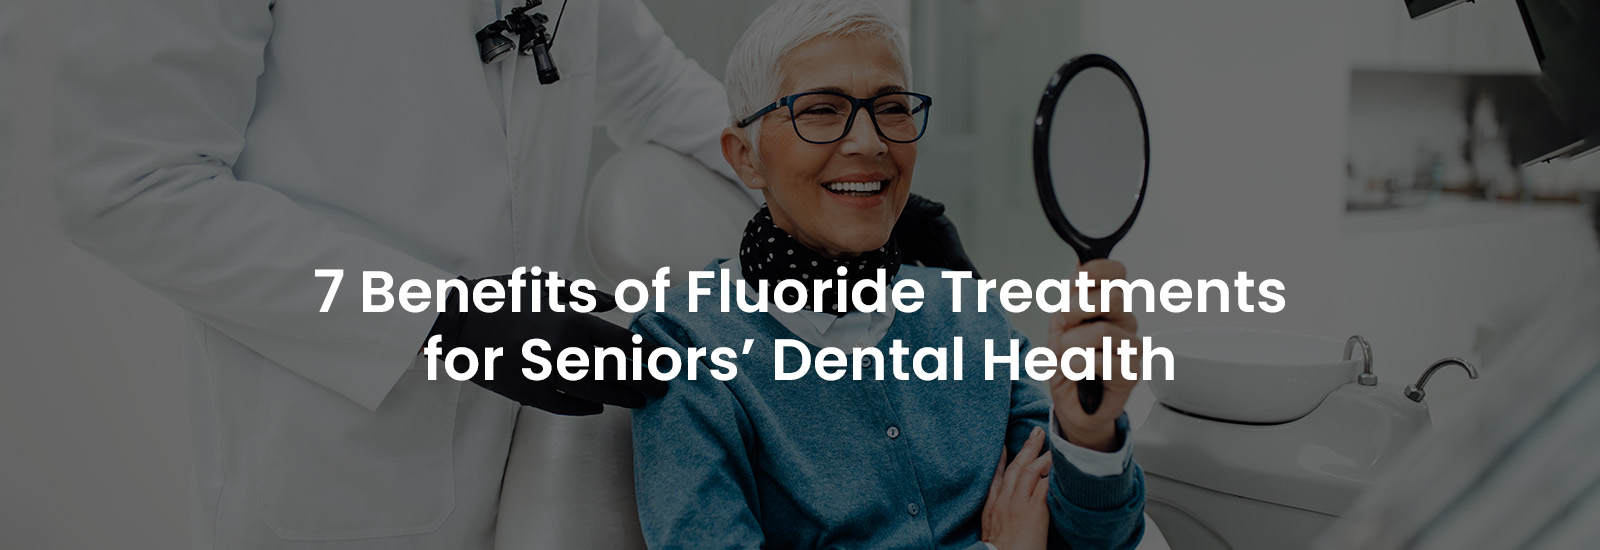 7 Benefits of Fluoride Treatments for Seniors Dental Health | Banner Image